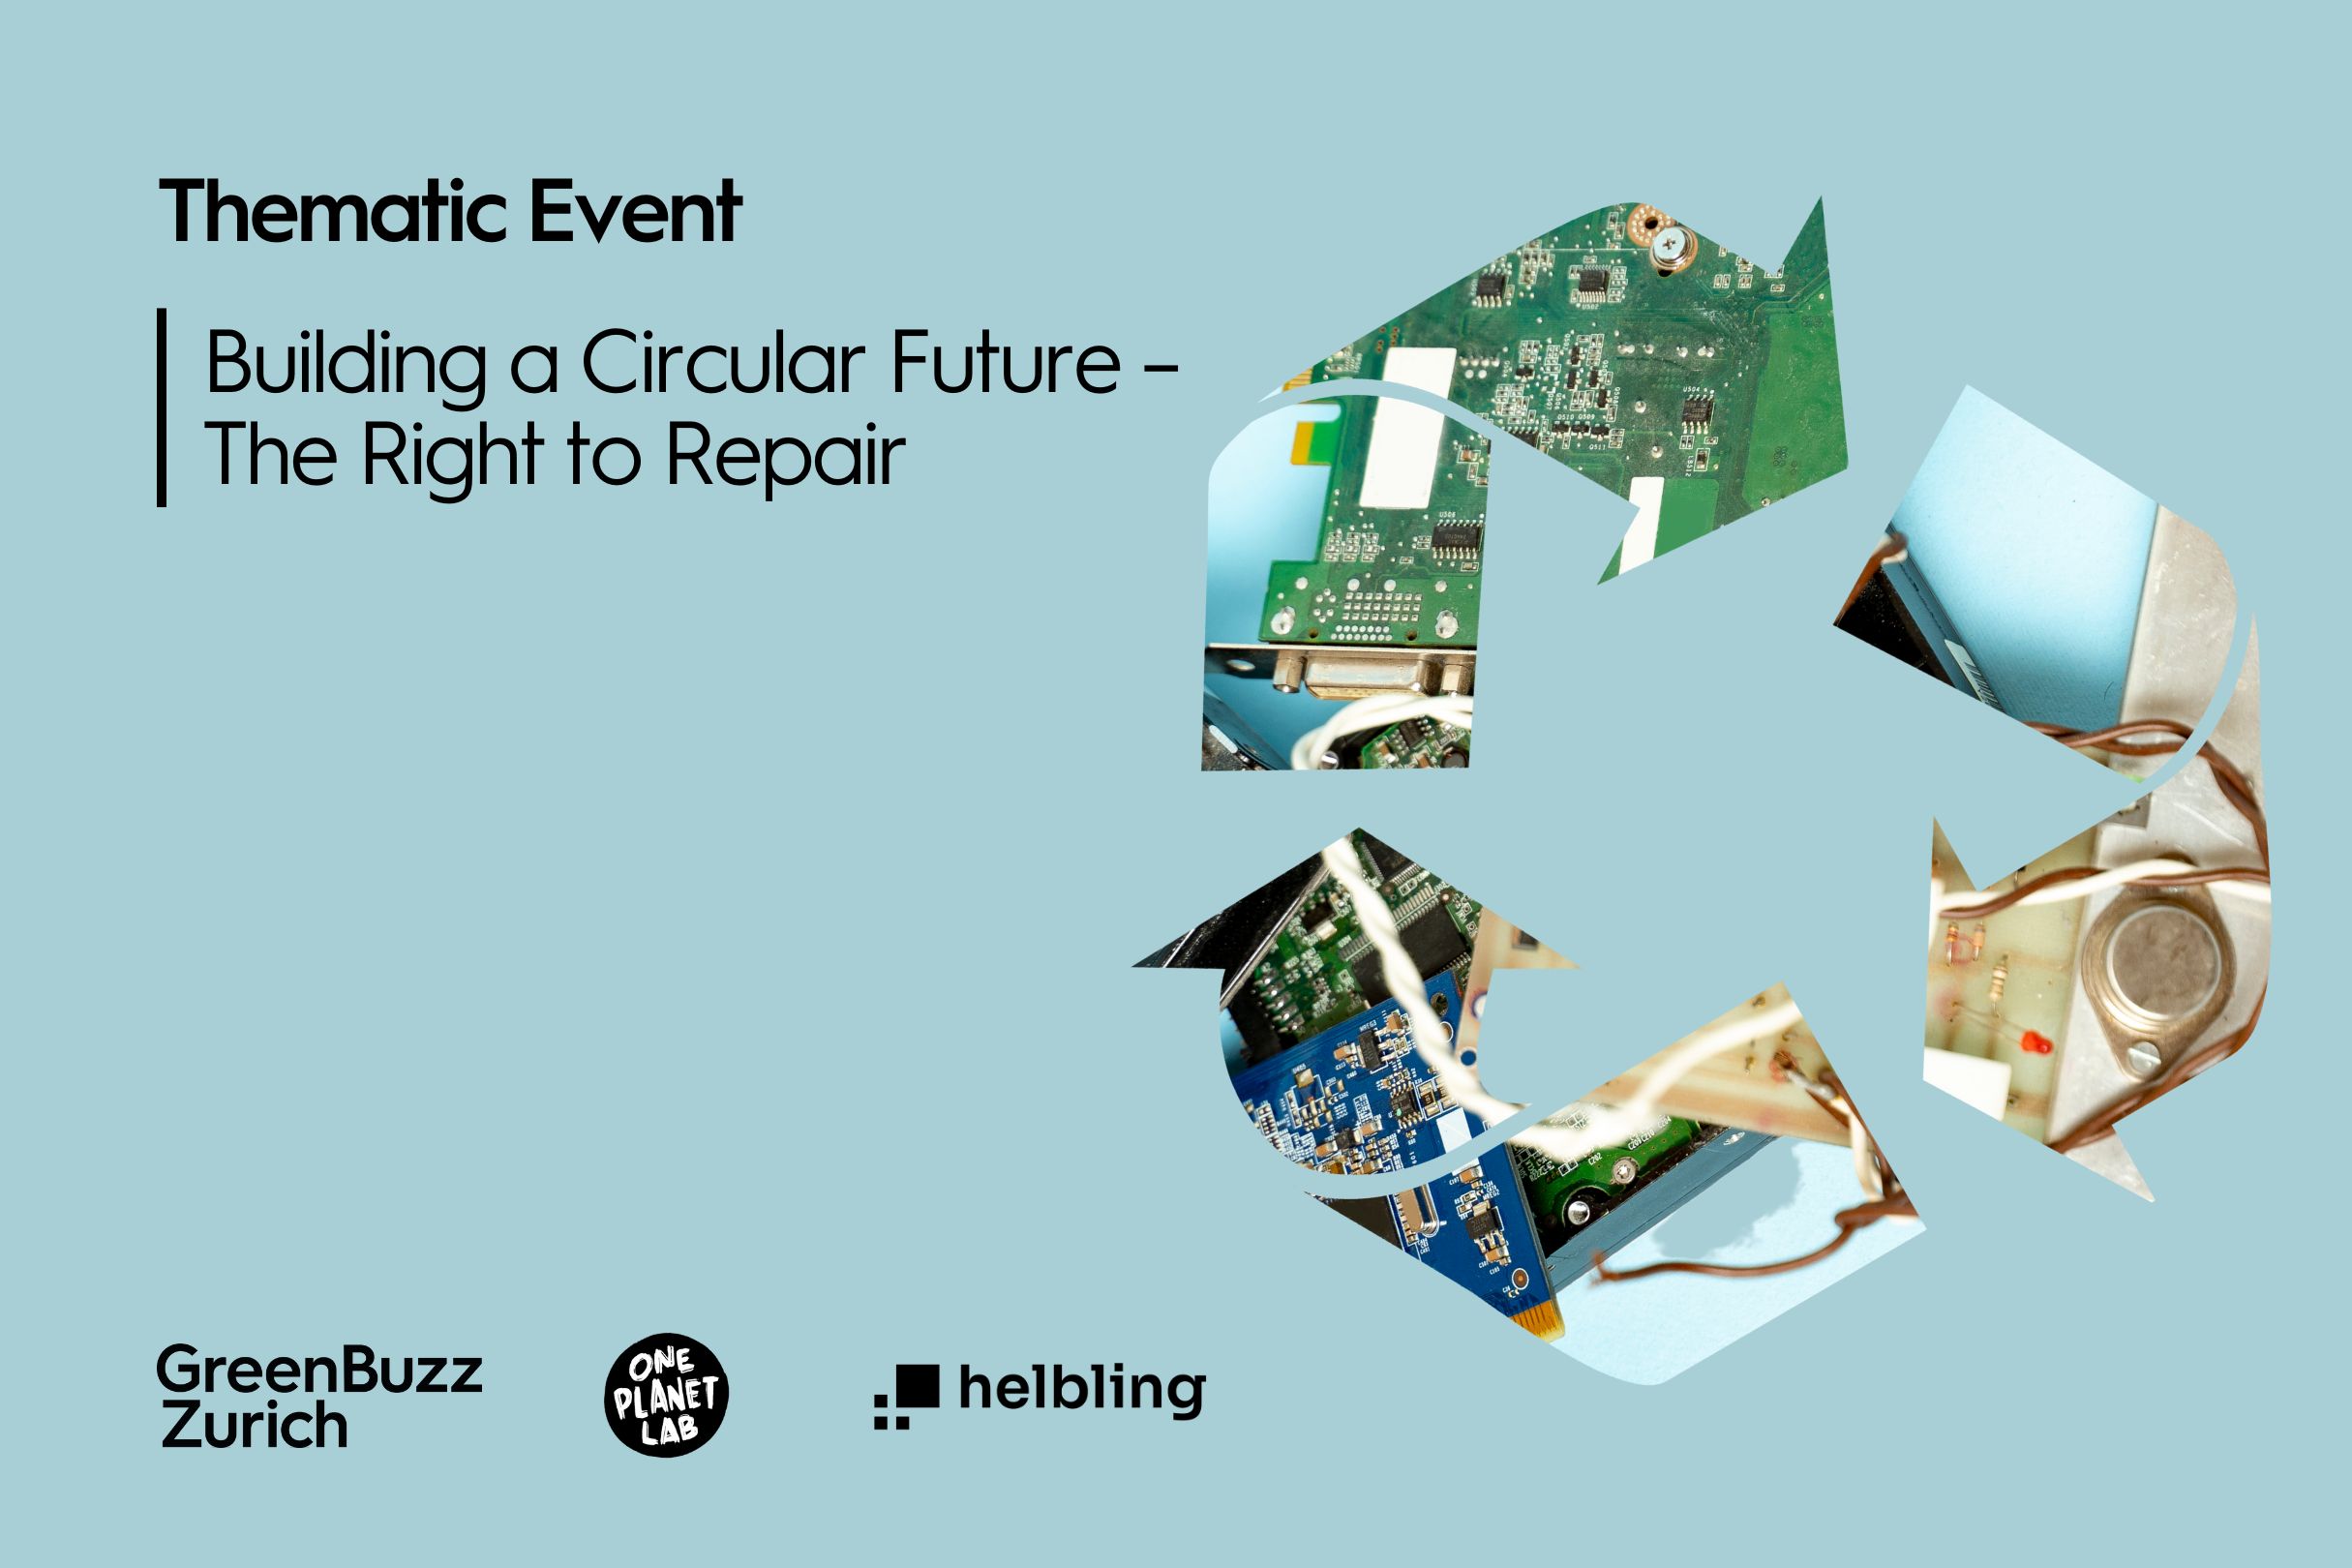 Thematic Event: Building a Circular Future